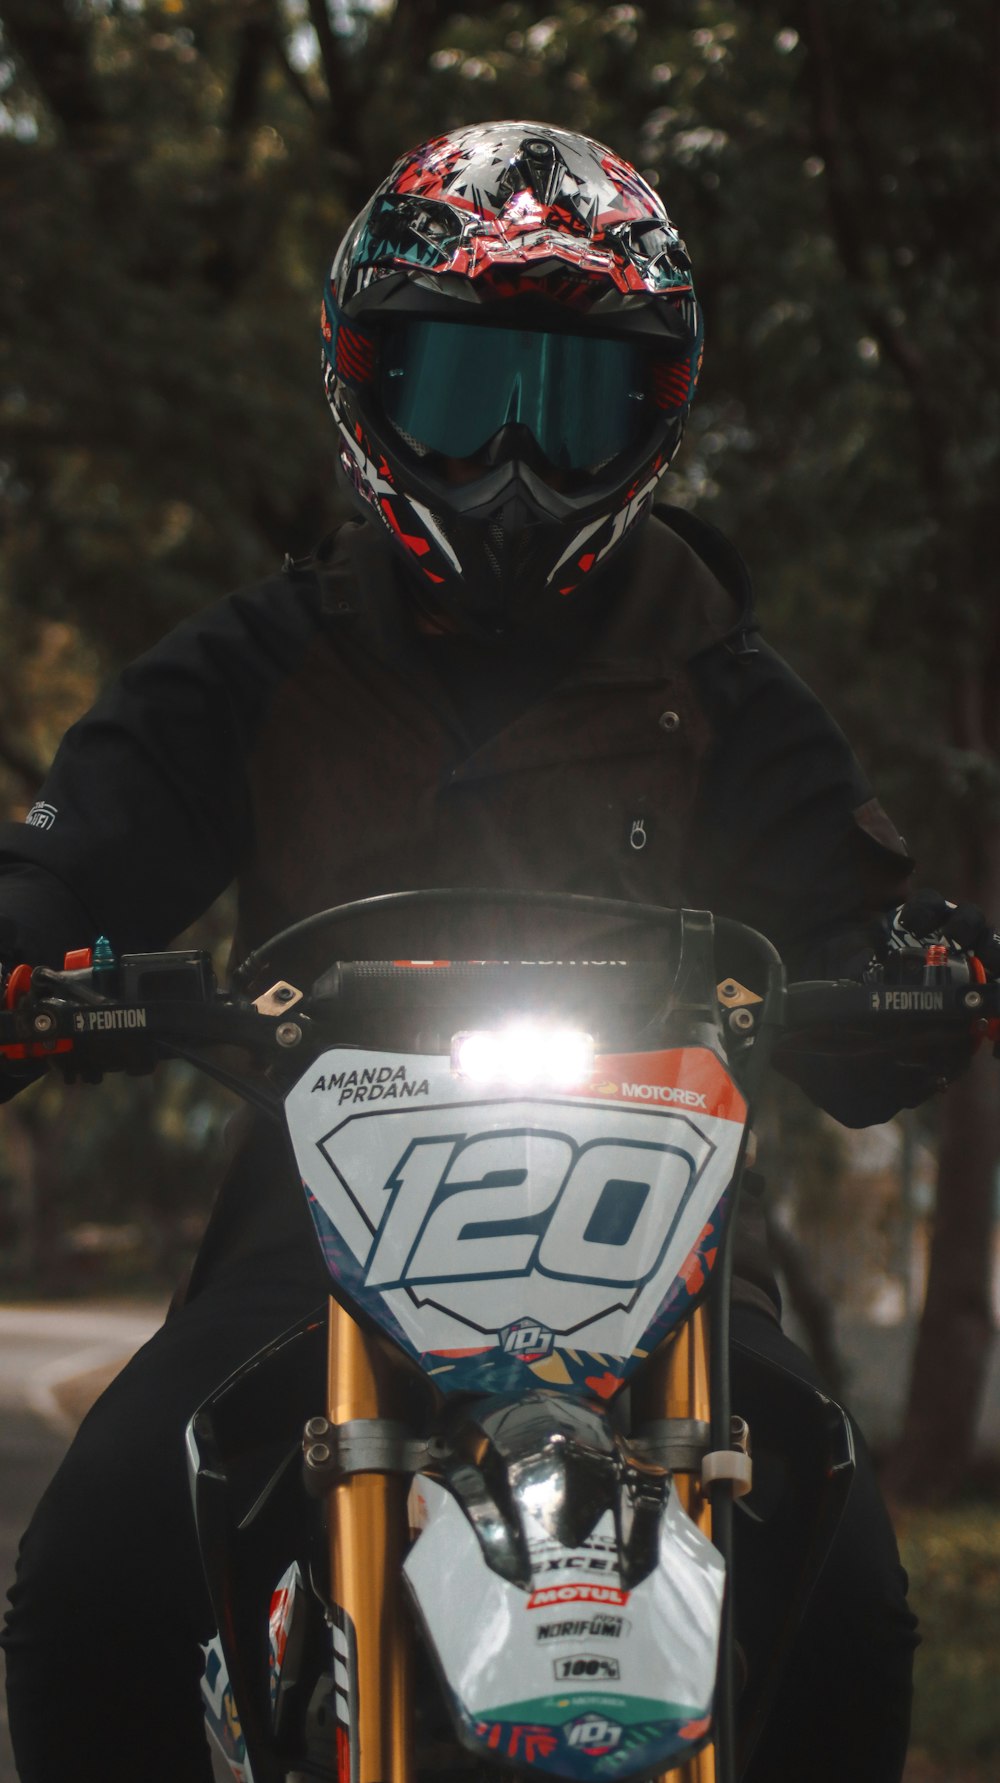 man in black jacket riding on black and orange motorcycle